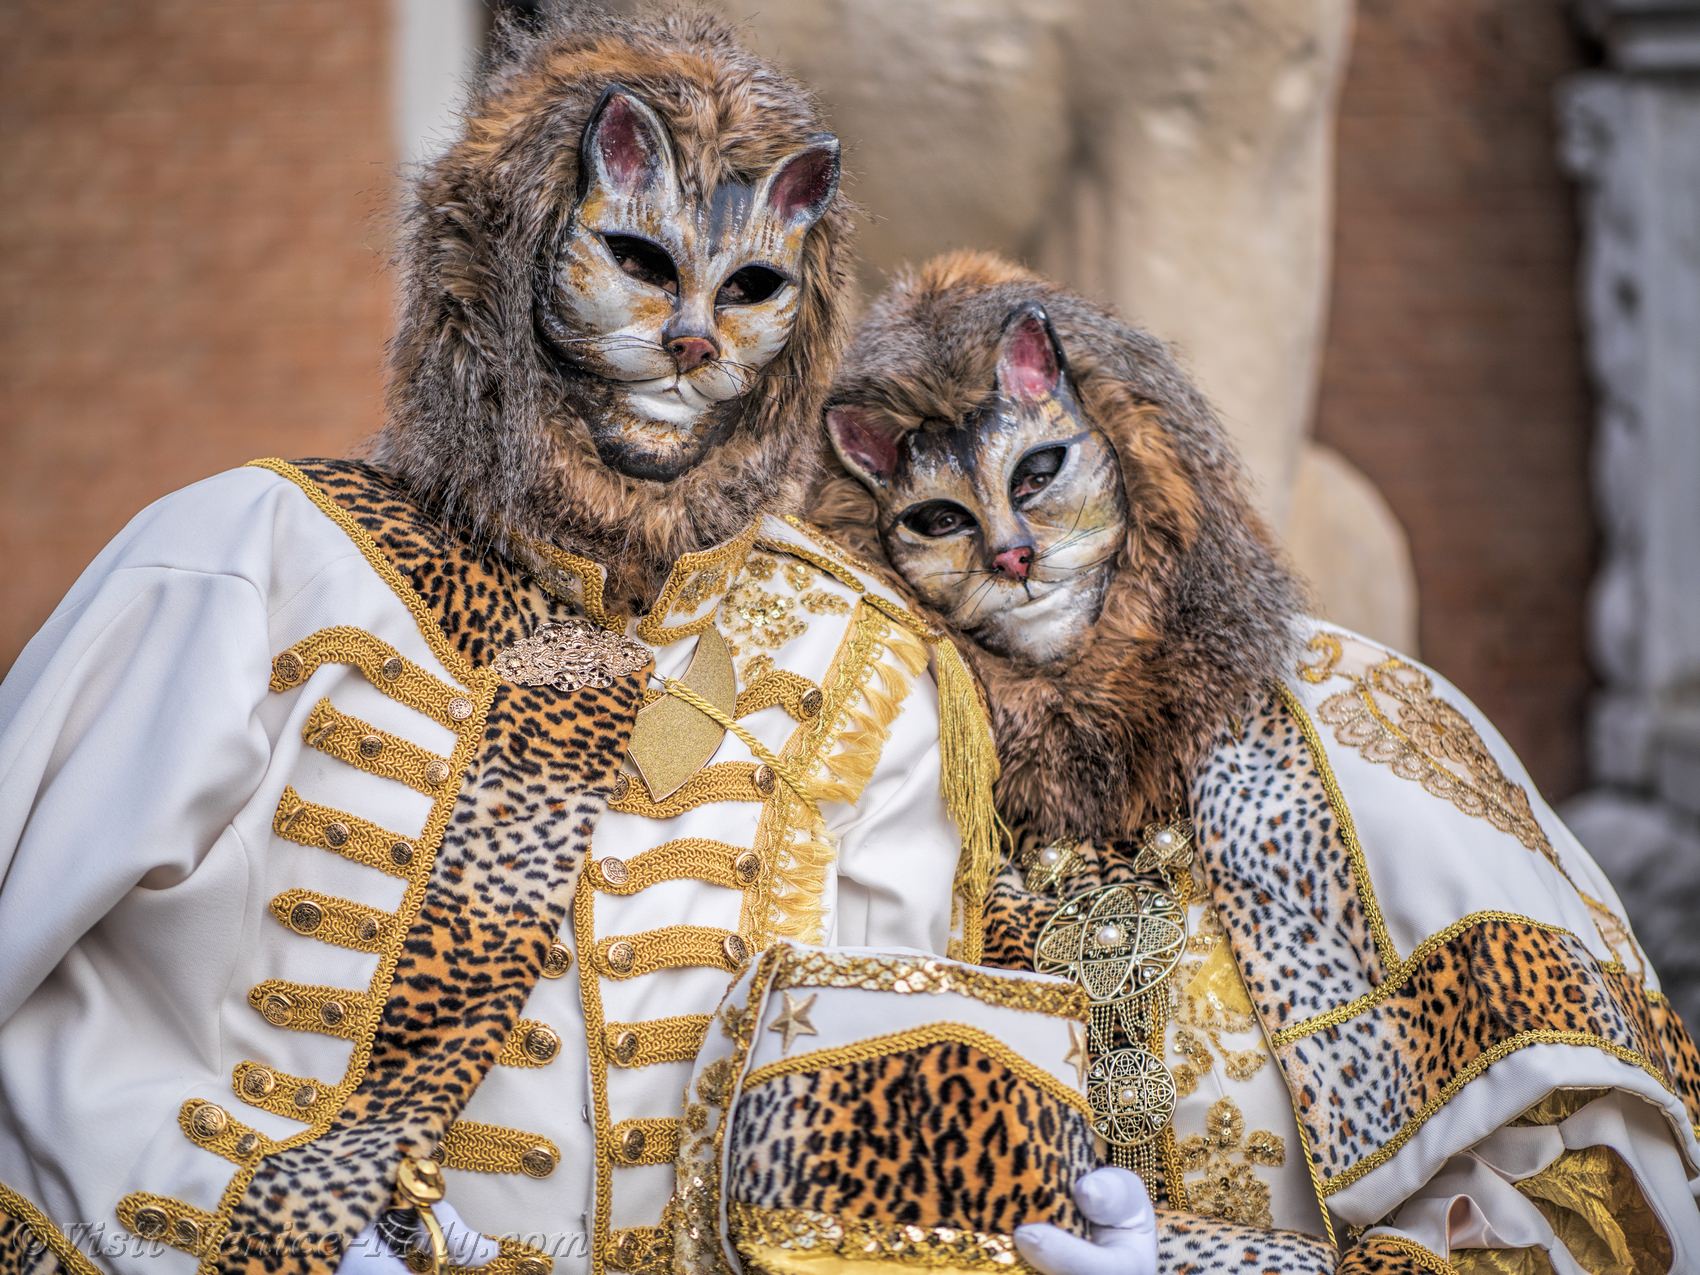 Venice Carnival Italy Photos 2016 - 14